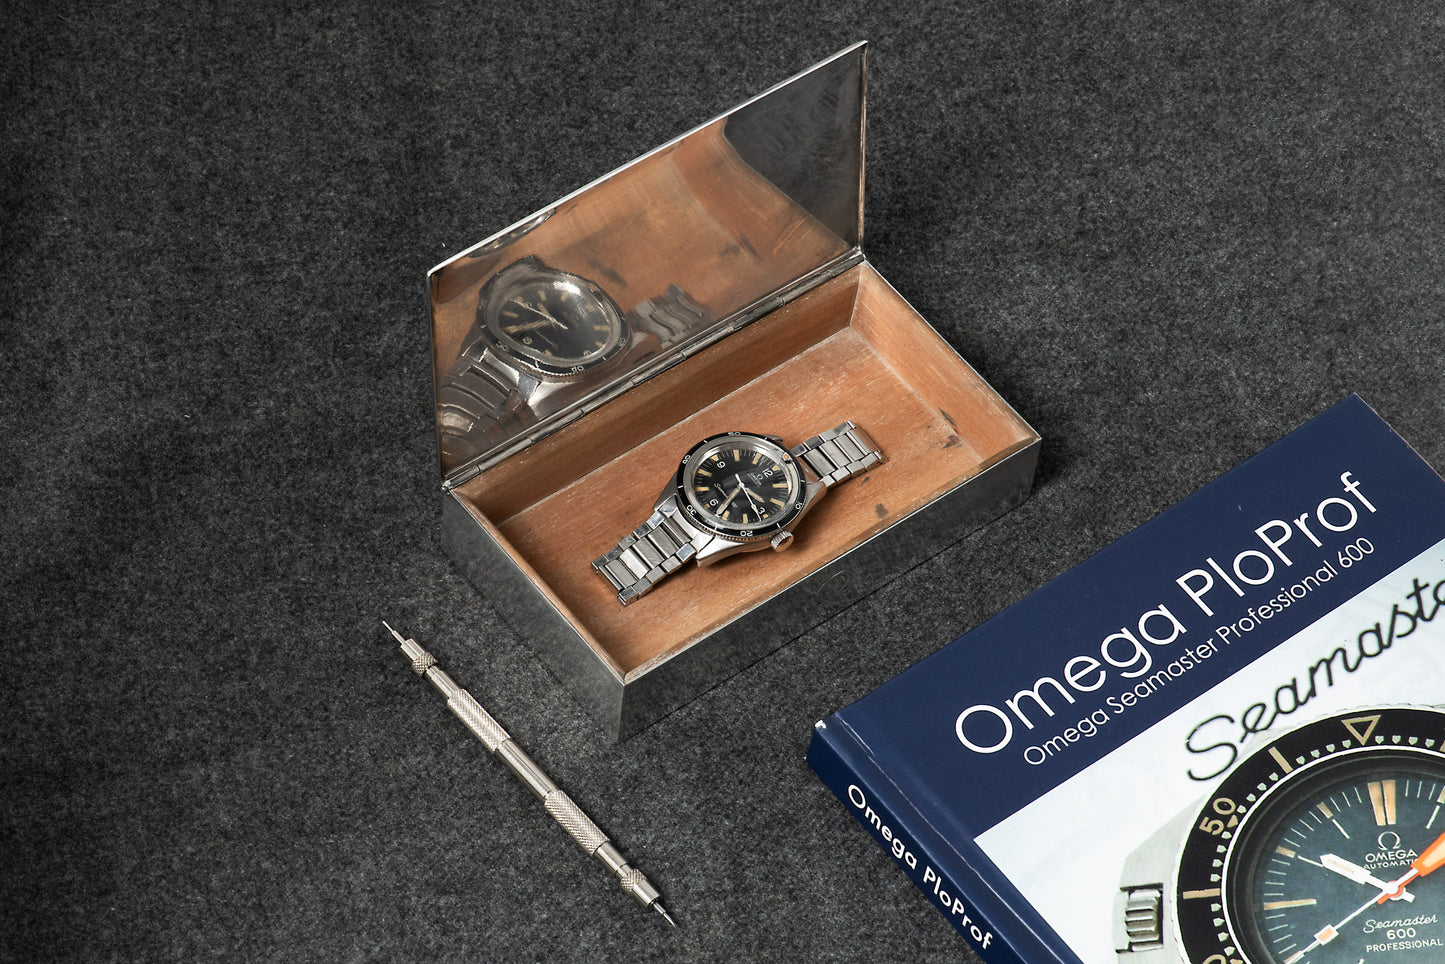 Omega Sterling Silver Presentation Box - Rectangular Textured Lid